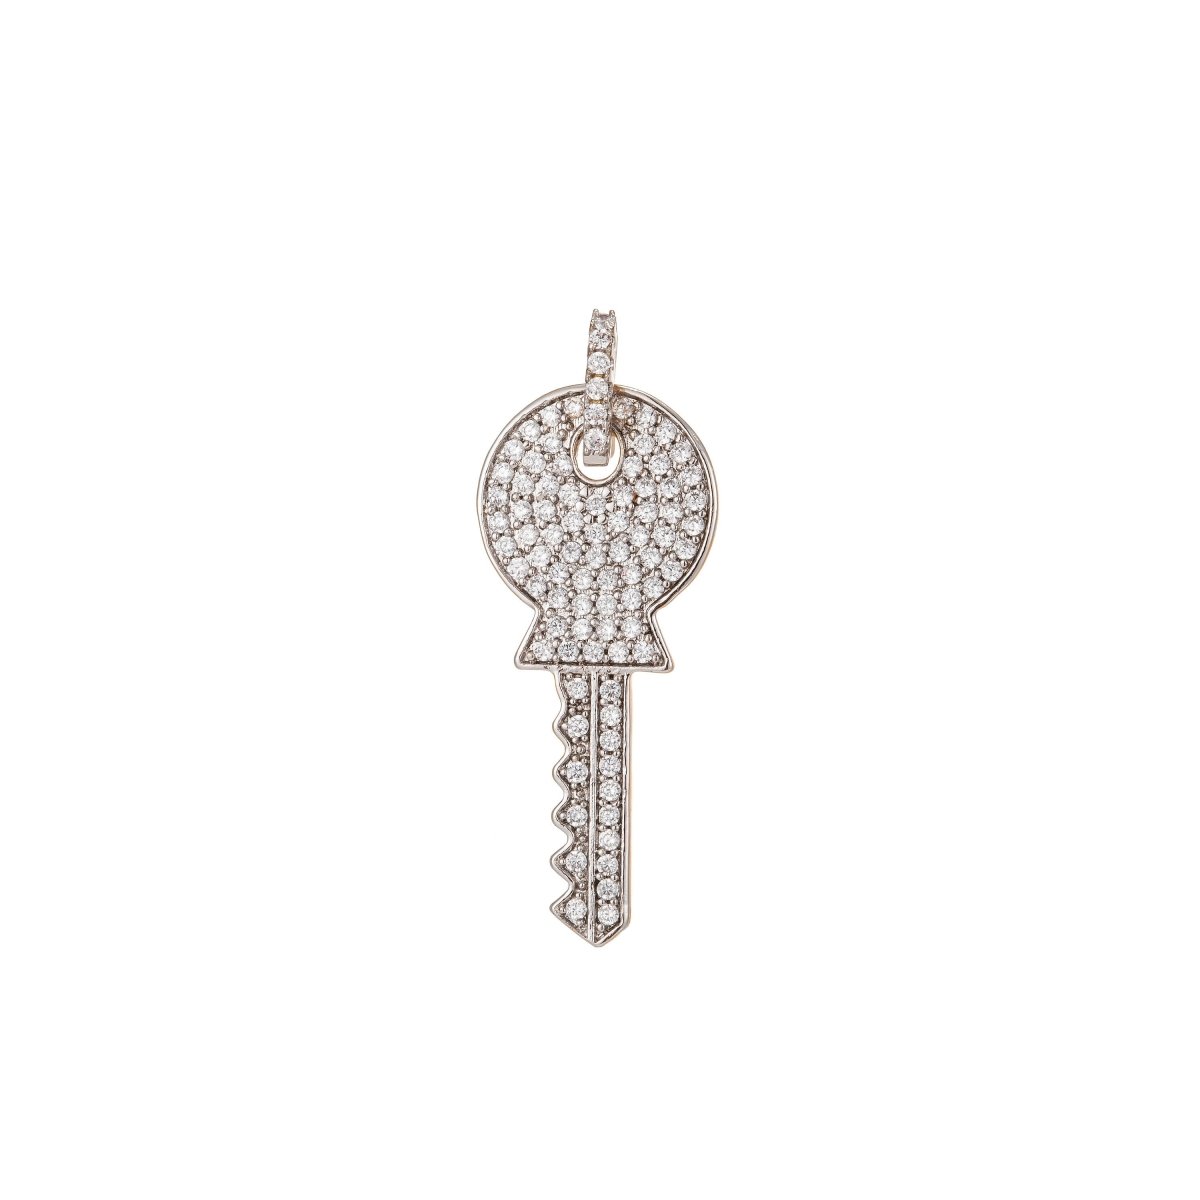 Silver Key Charm, Micro Pave CZ Charm, Rhodium Plated Pendant Dainty Diamond Key Necklace Charm for Jewelry Making I-197 - DLUXCA